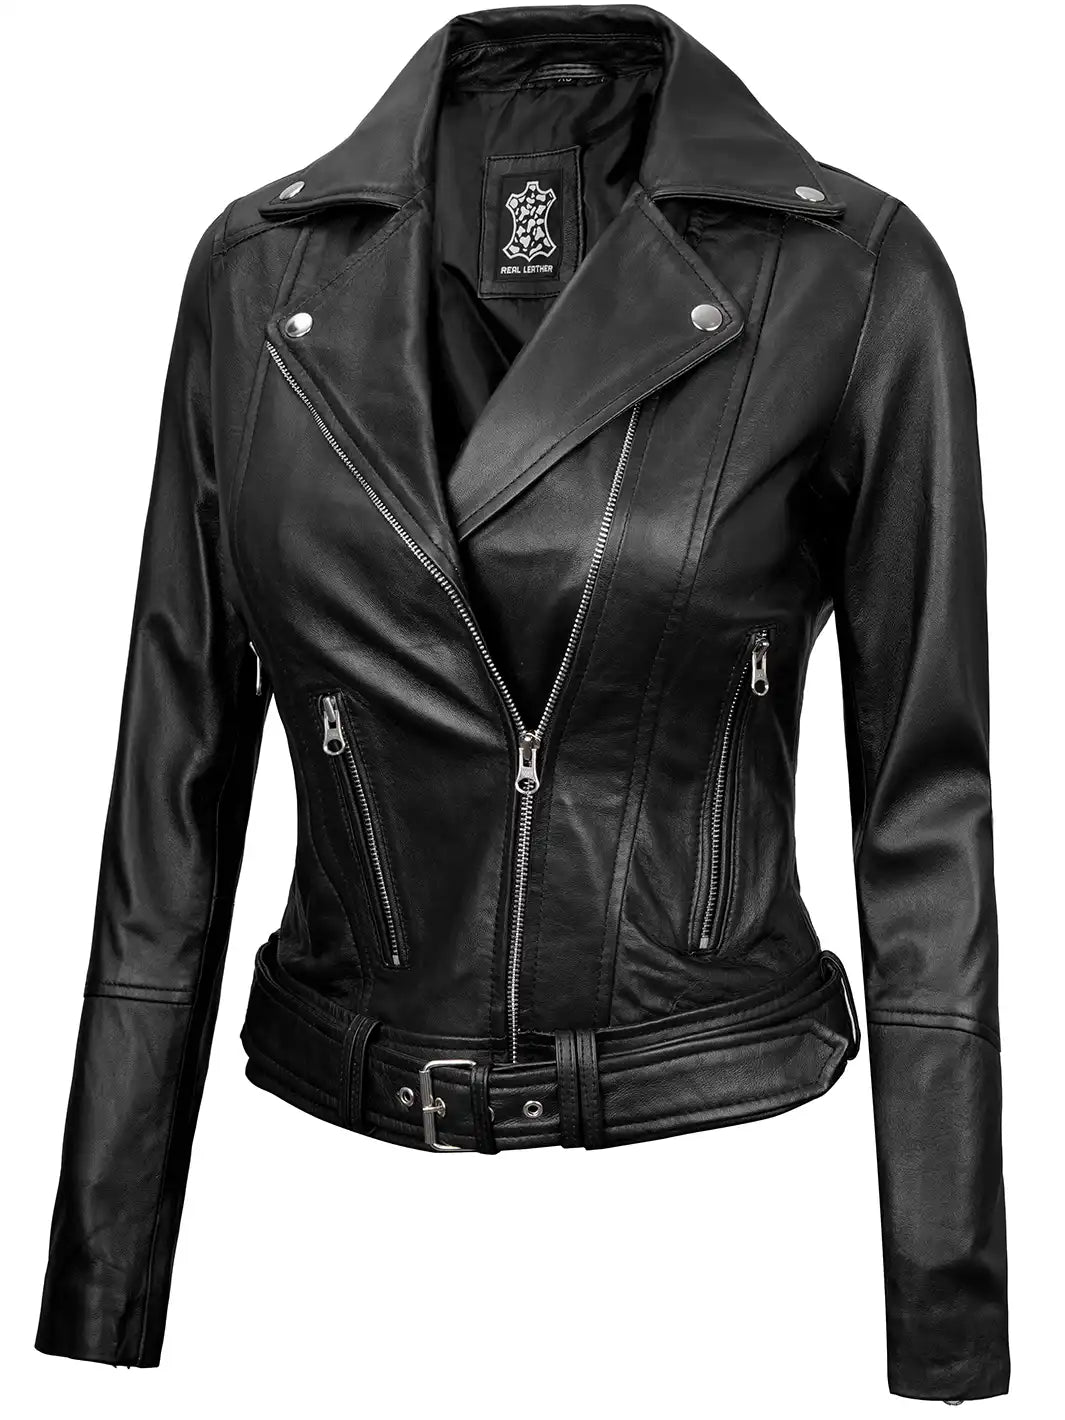 Womens black leather jacket